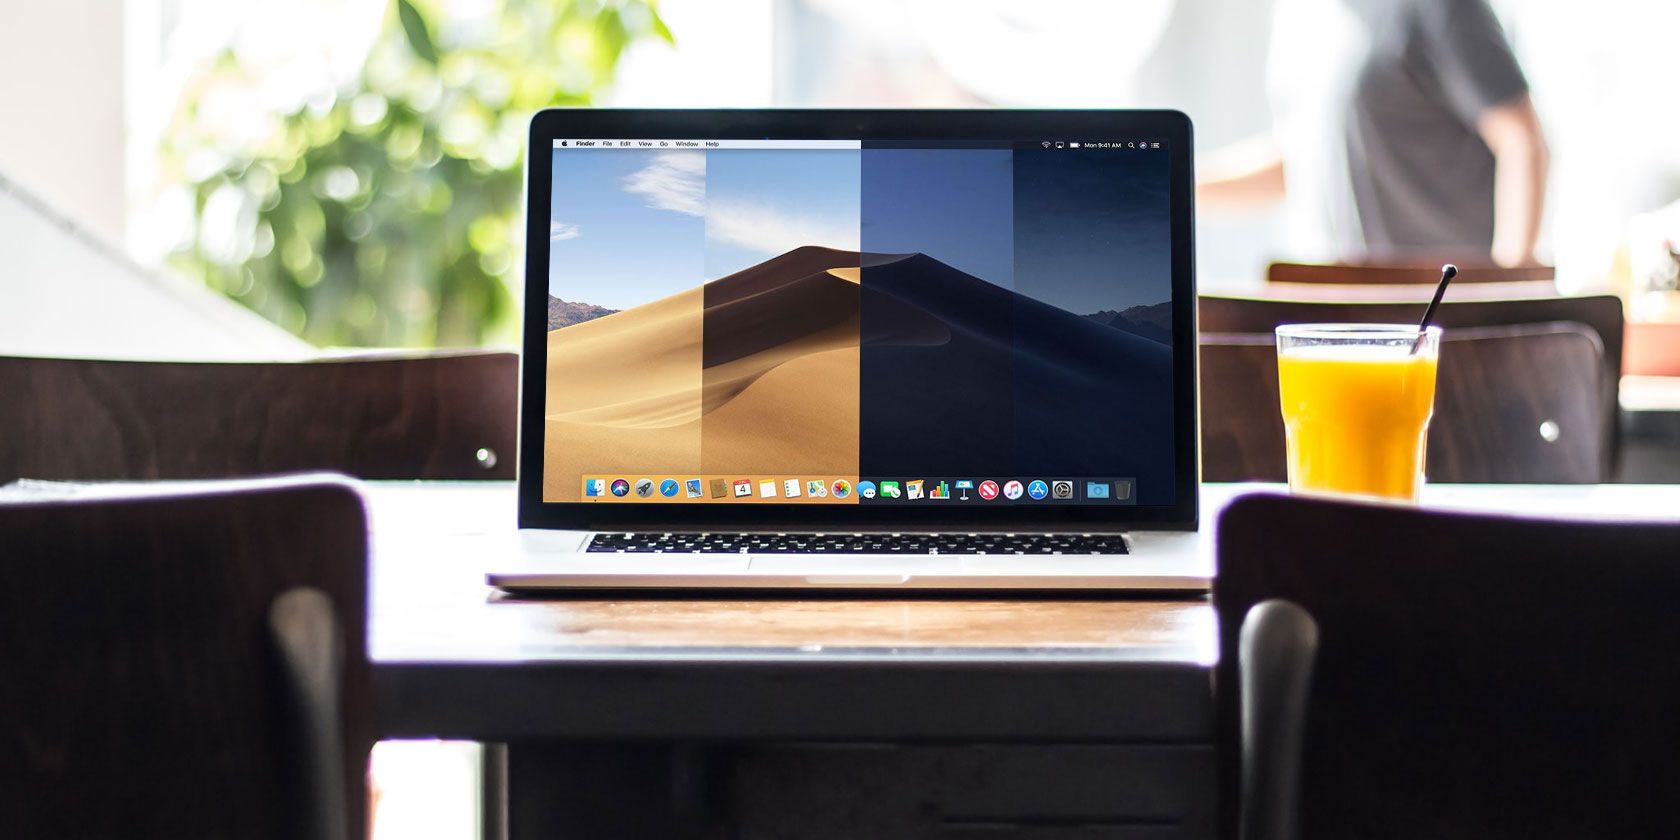 Free Desktop For Mac Wallpapers